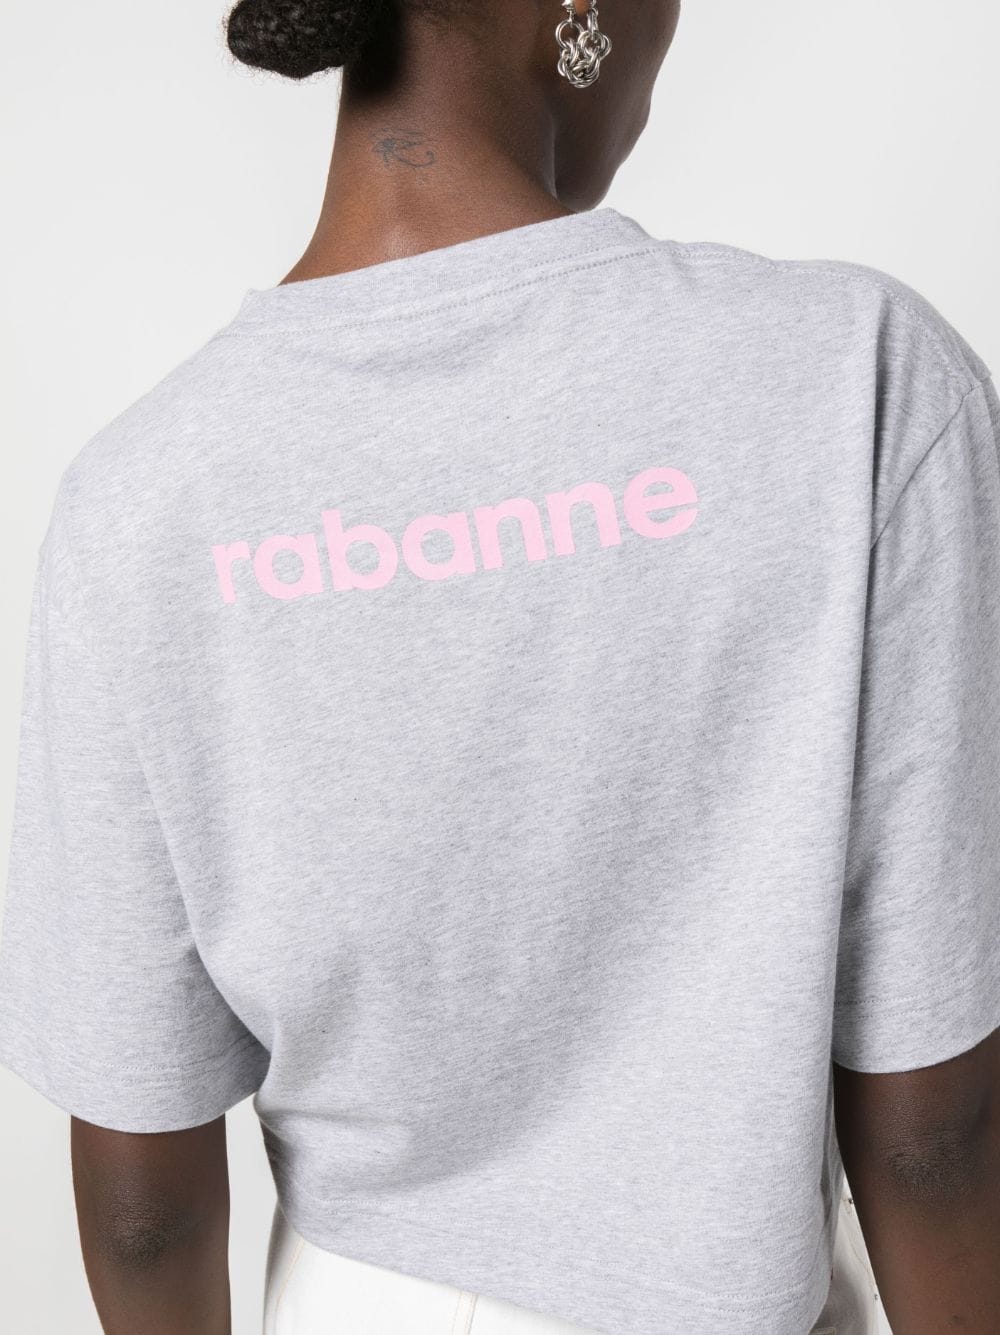 Rabanne T-shirt met logoprint Grijs